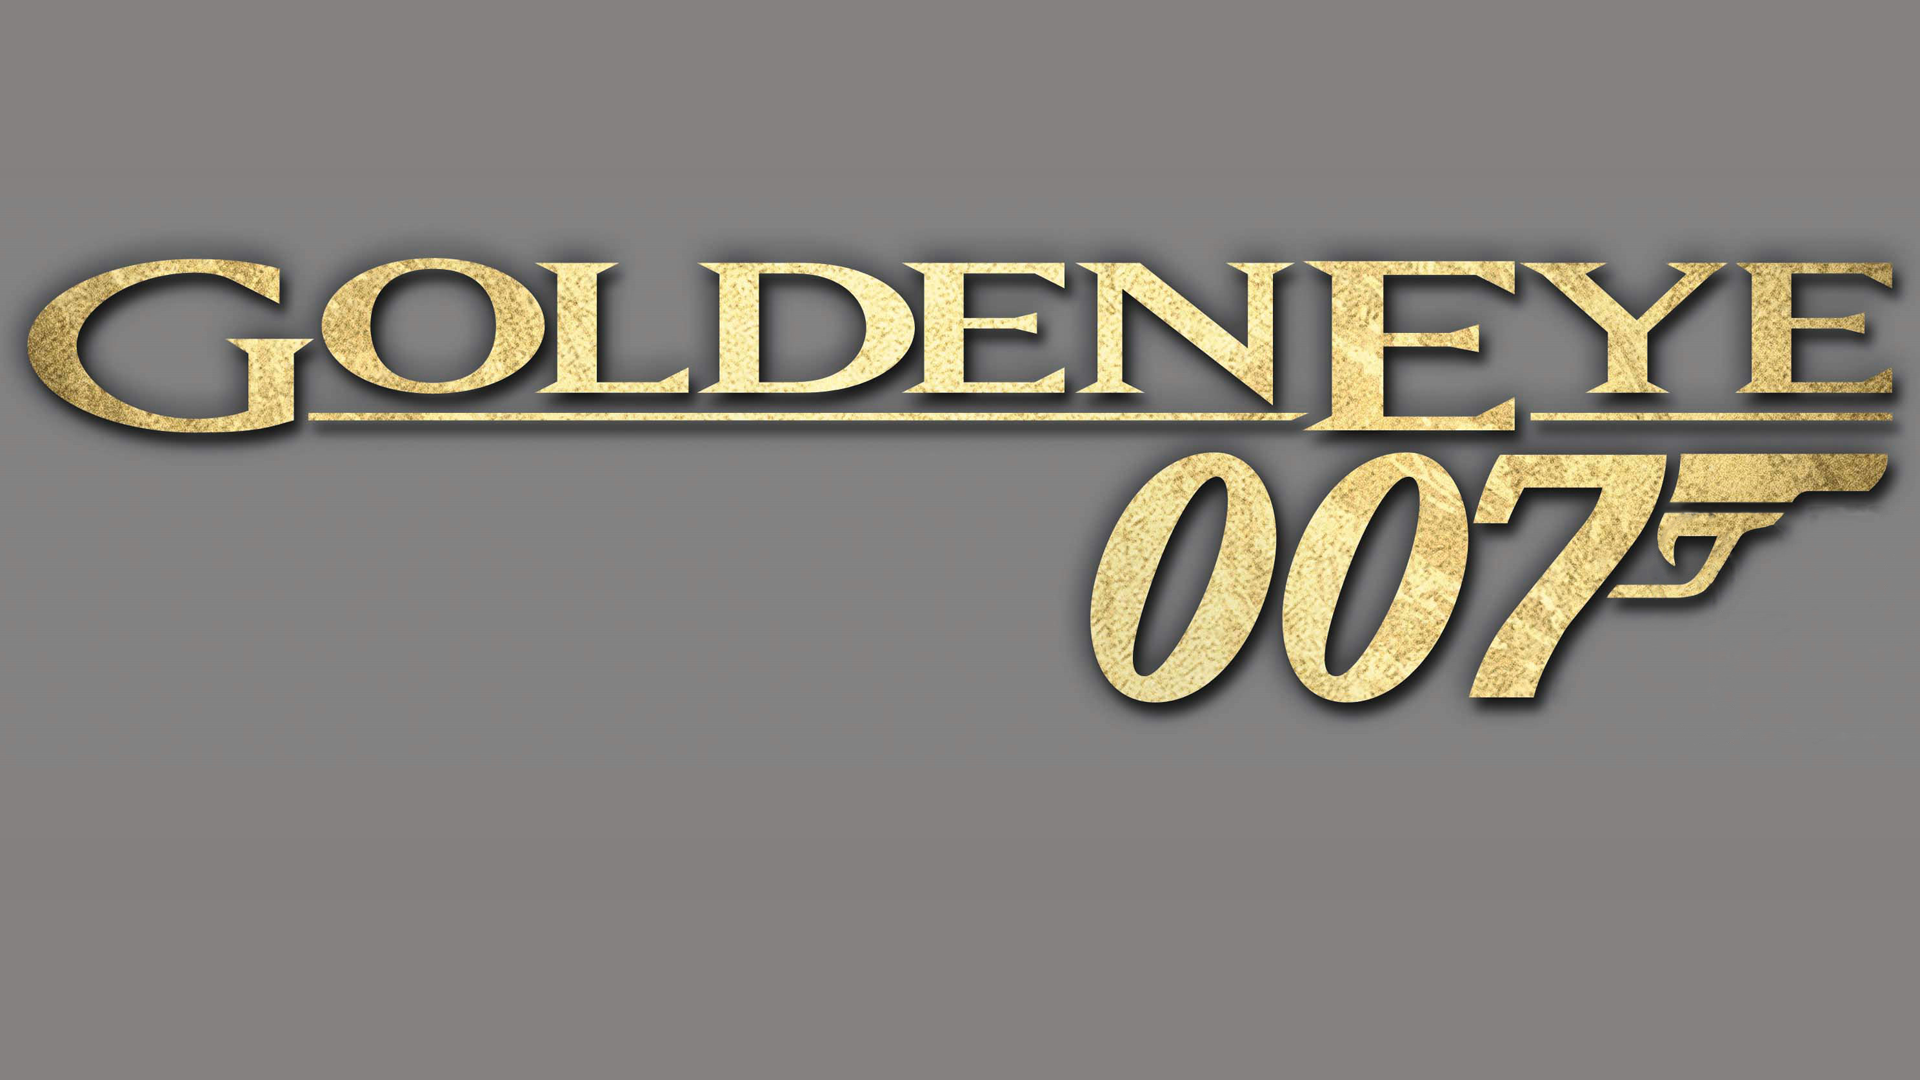 Goldeneye 007 (N64) Logo